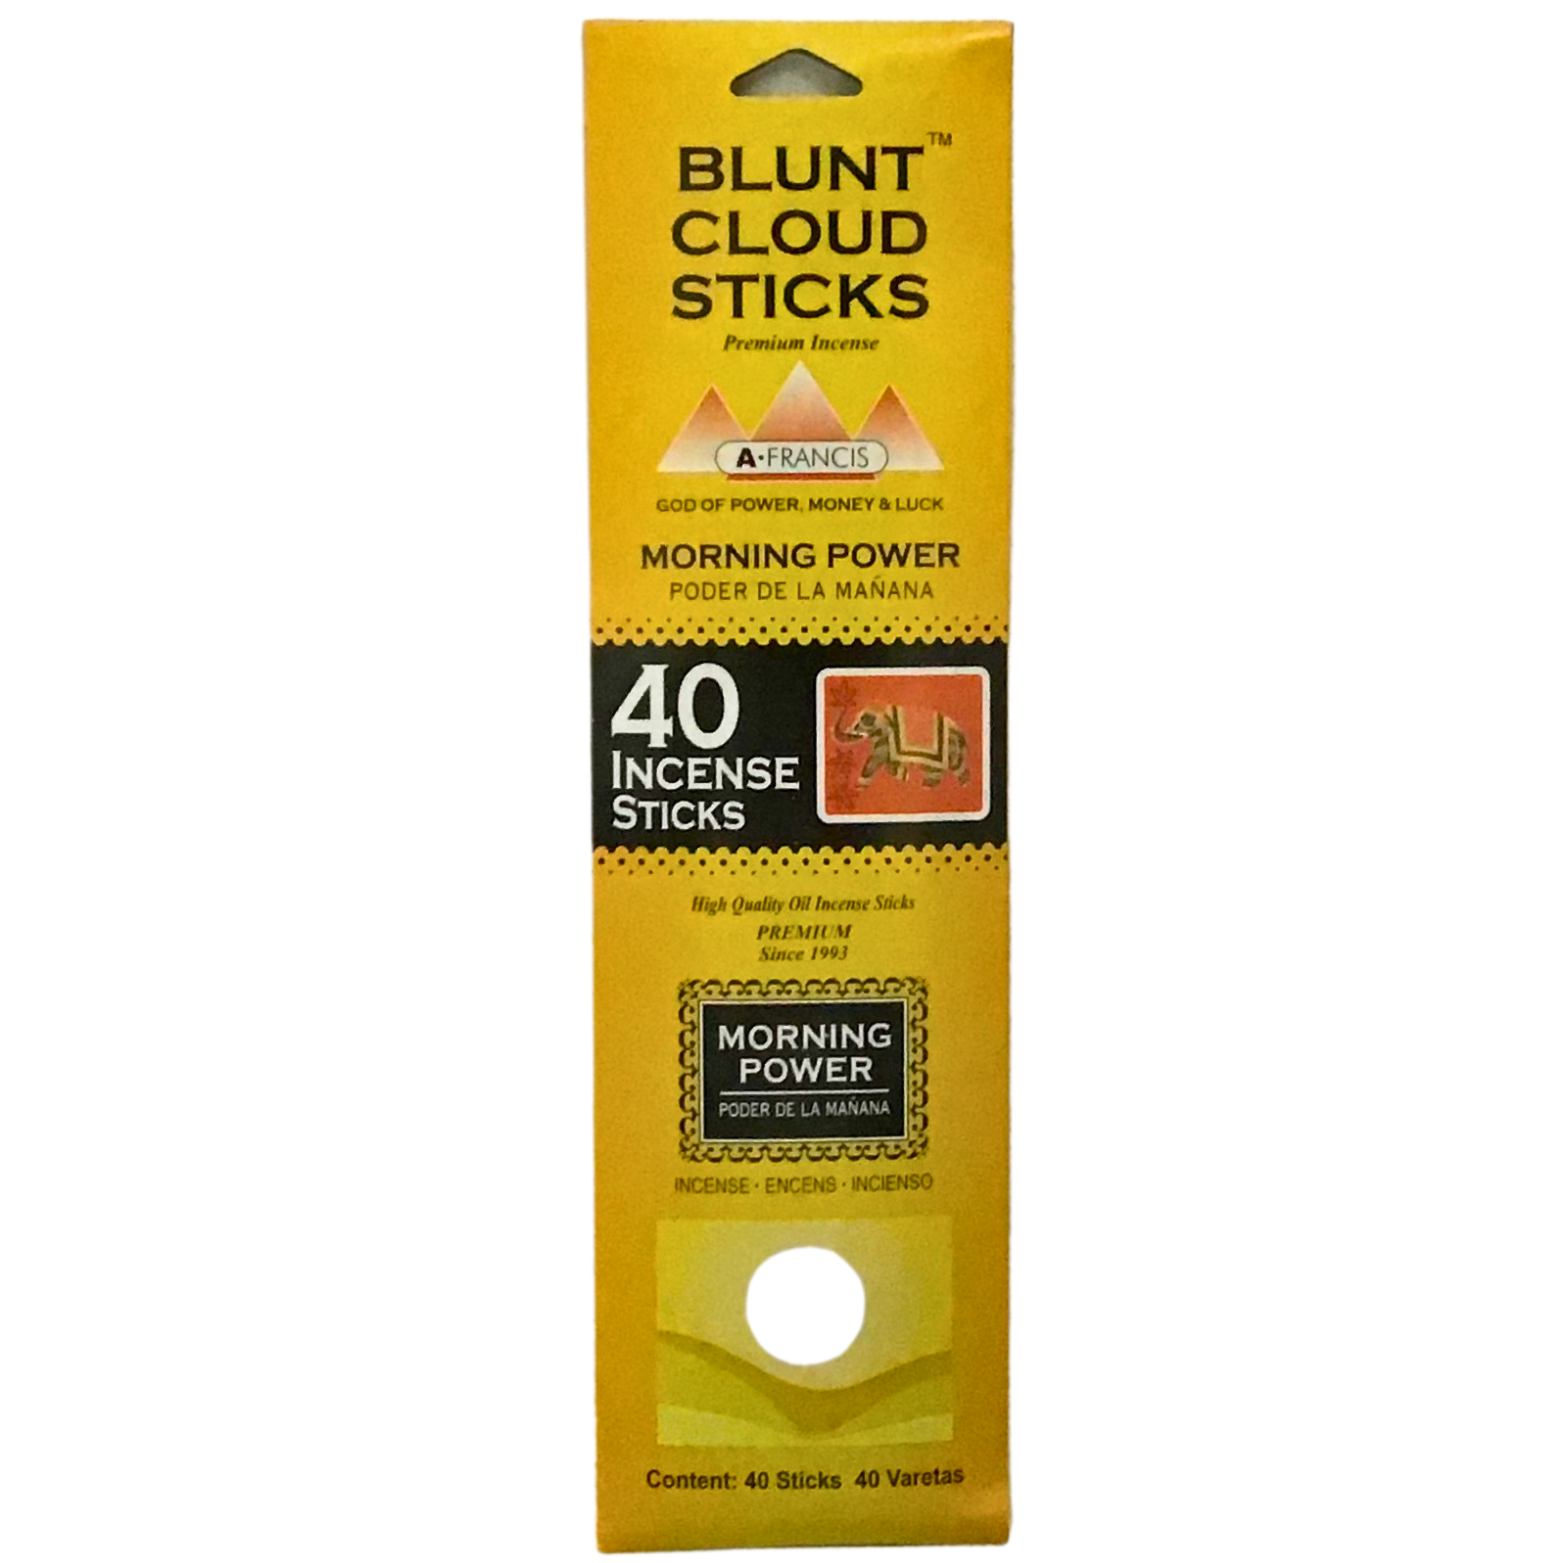 Blunt Cloud Morning Power 11 Inch Incense Sticks